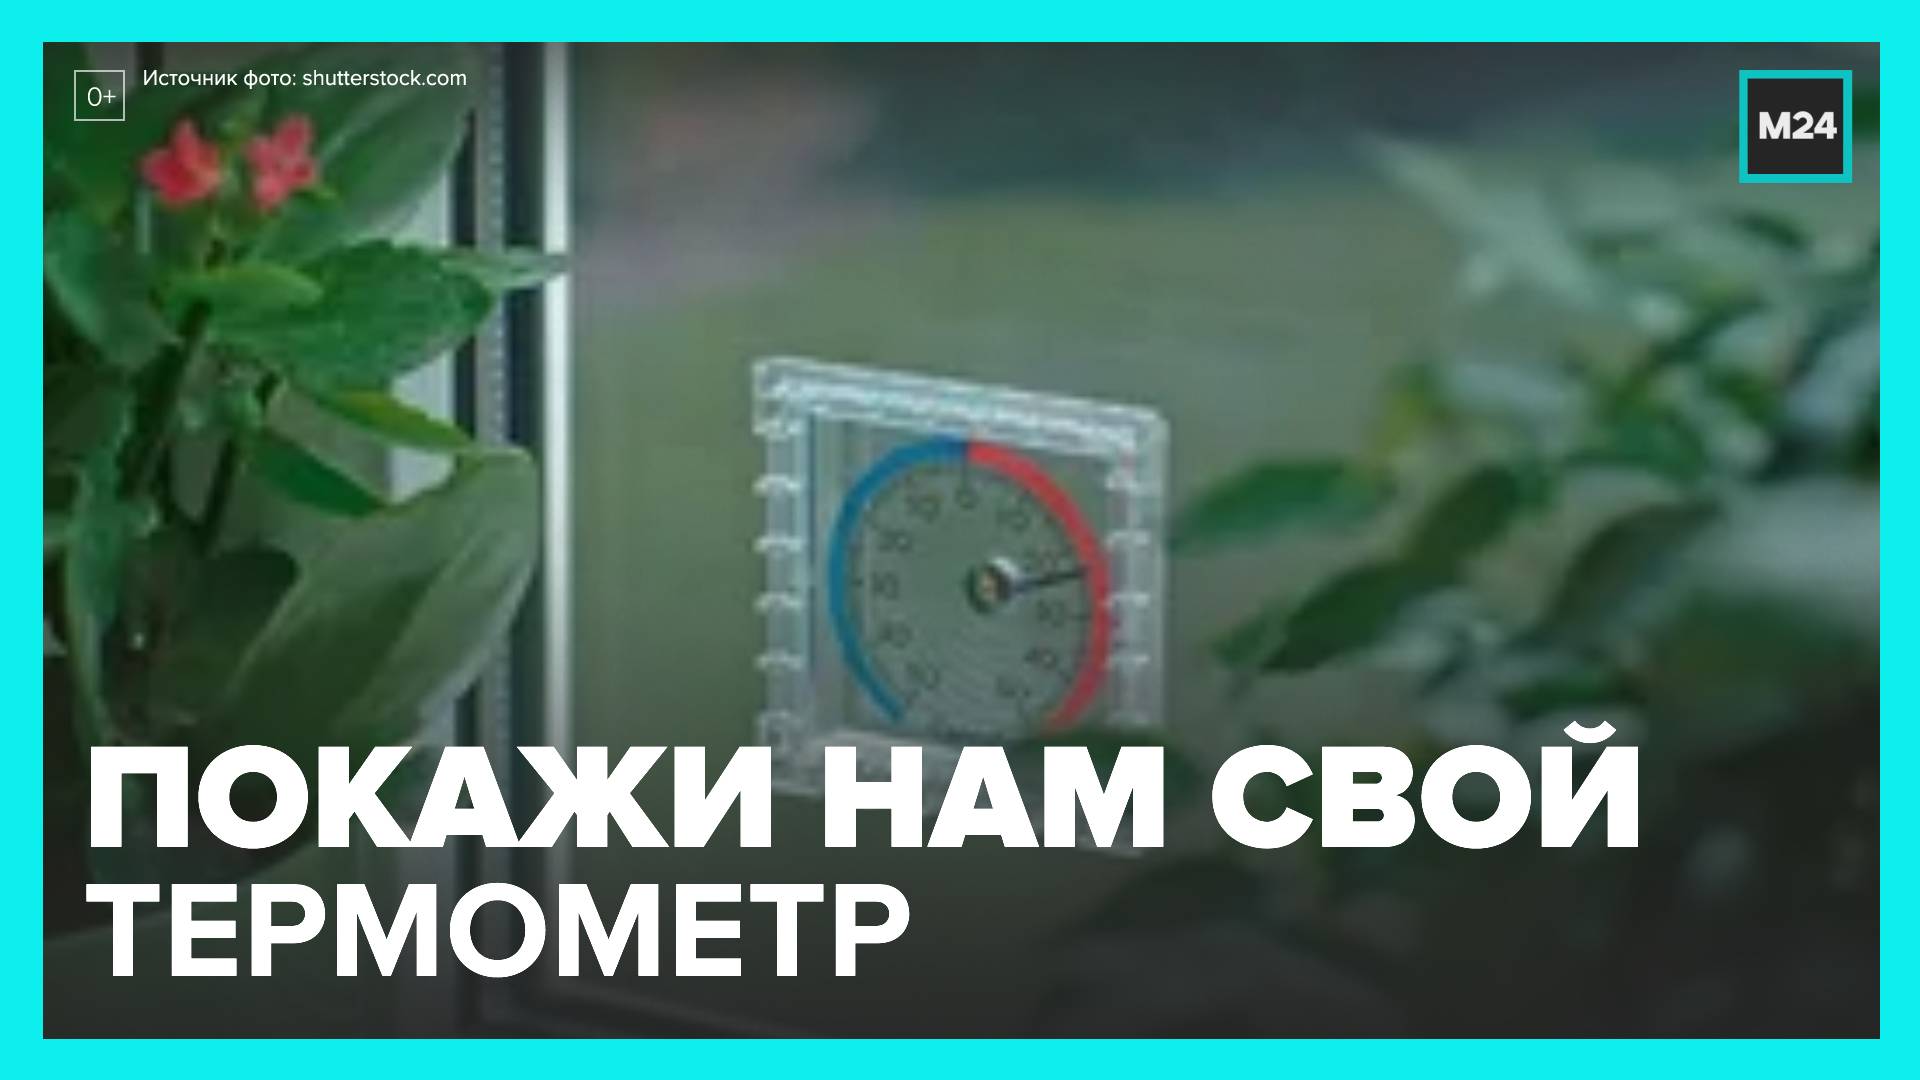 Москва 24 предложила зрителям показать фото своих термометров - Москва 24